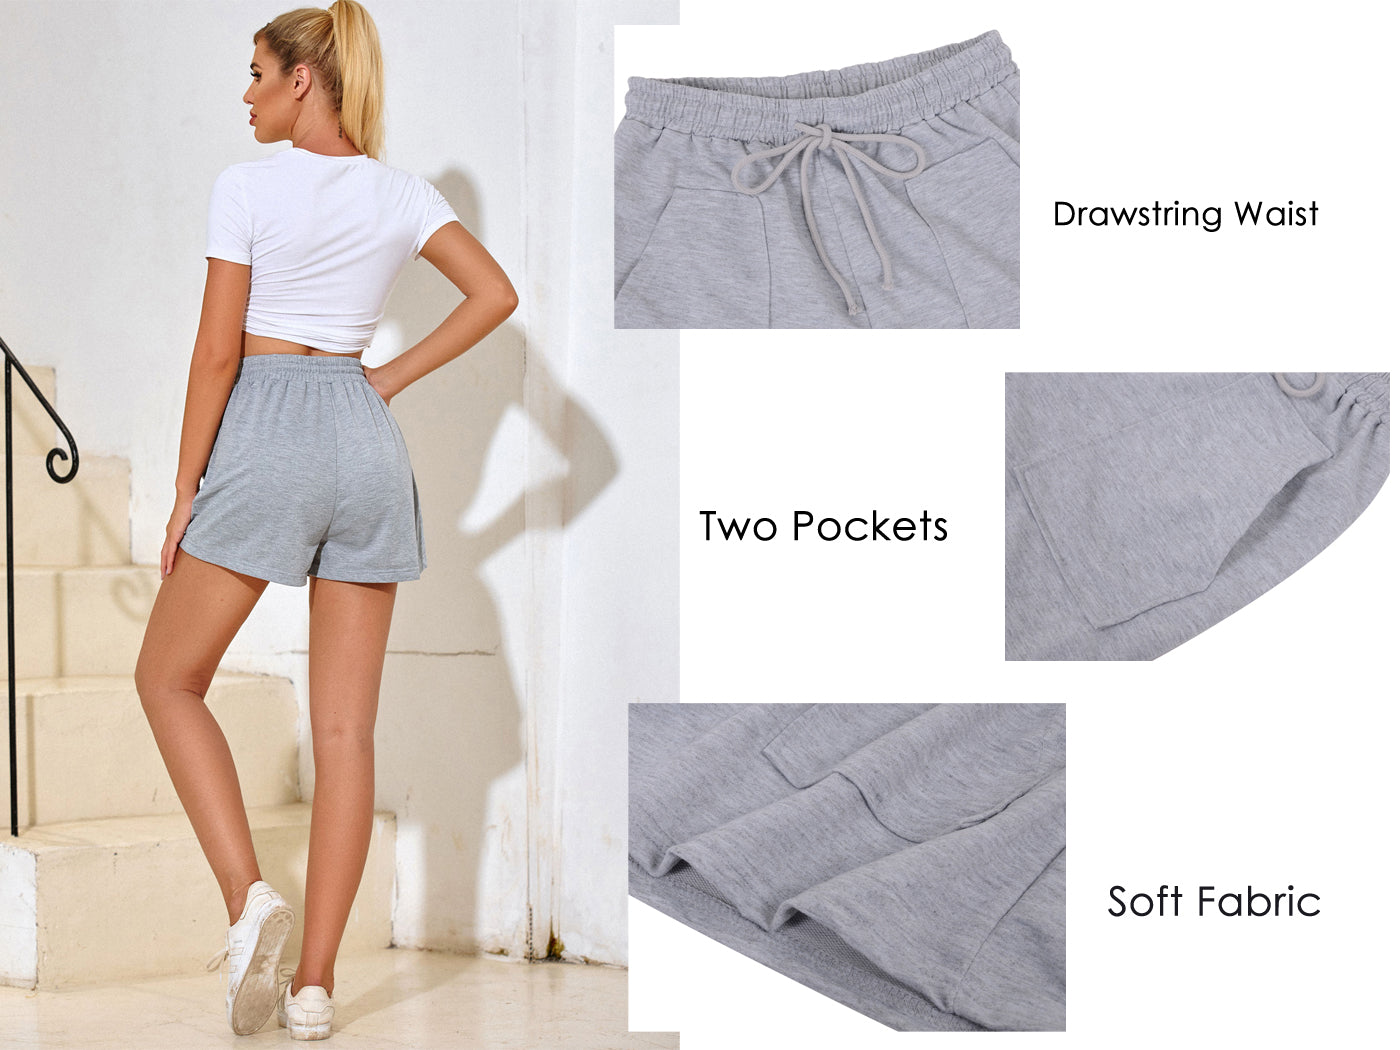 Running Short Casual Loose Plain Drawstring Elastic Waist Pockets Summer Beach Shorts Lounge Pants